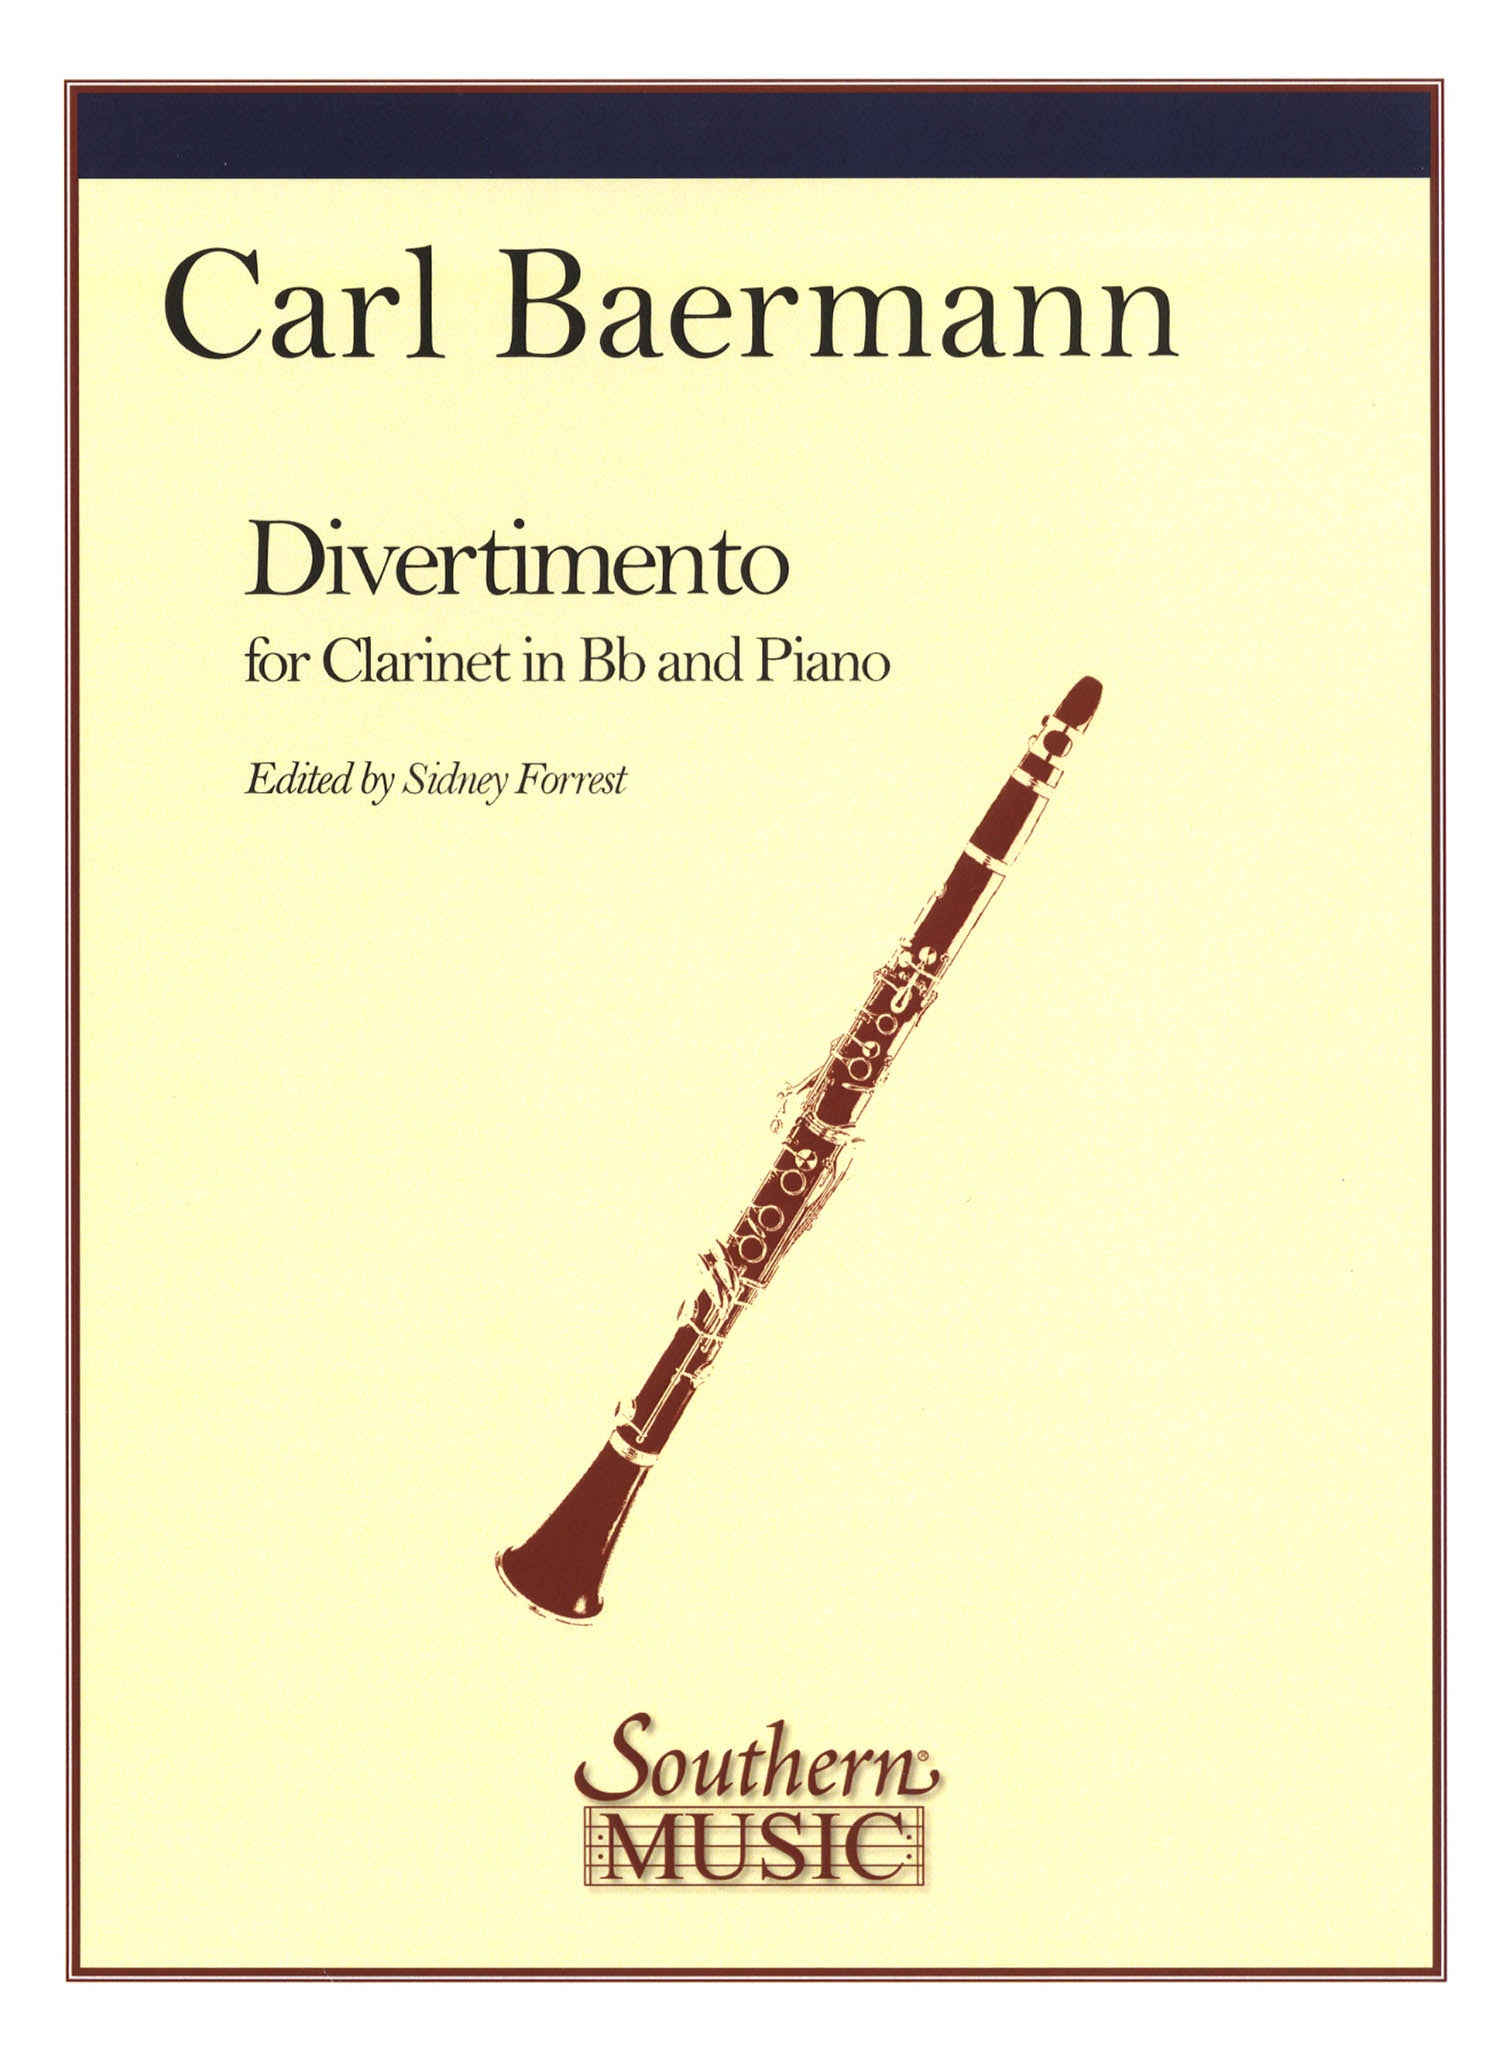 Carl Baermann Divertimento clarinet and piano cover